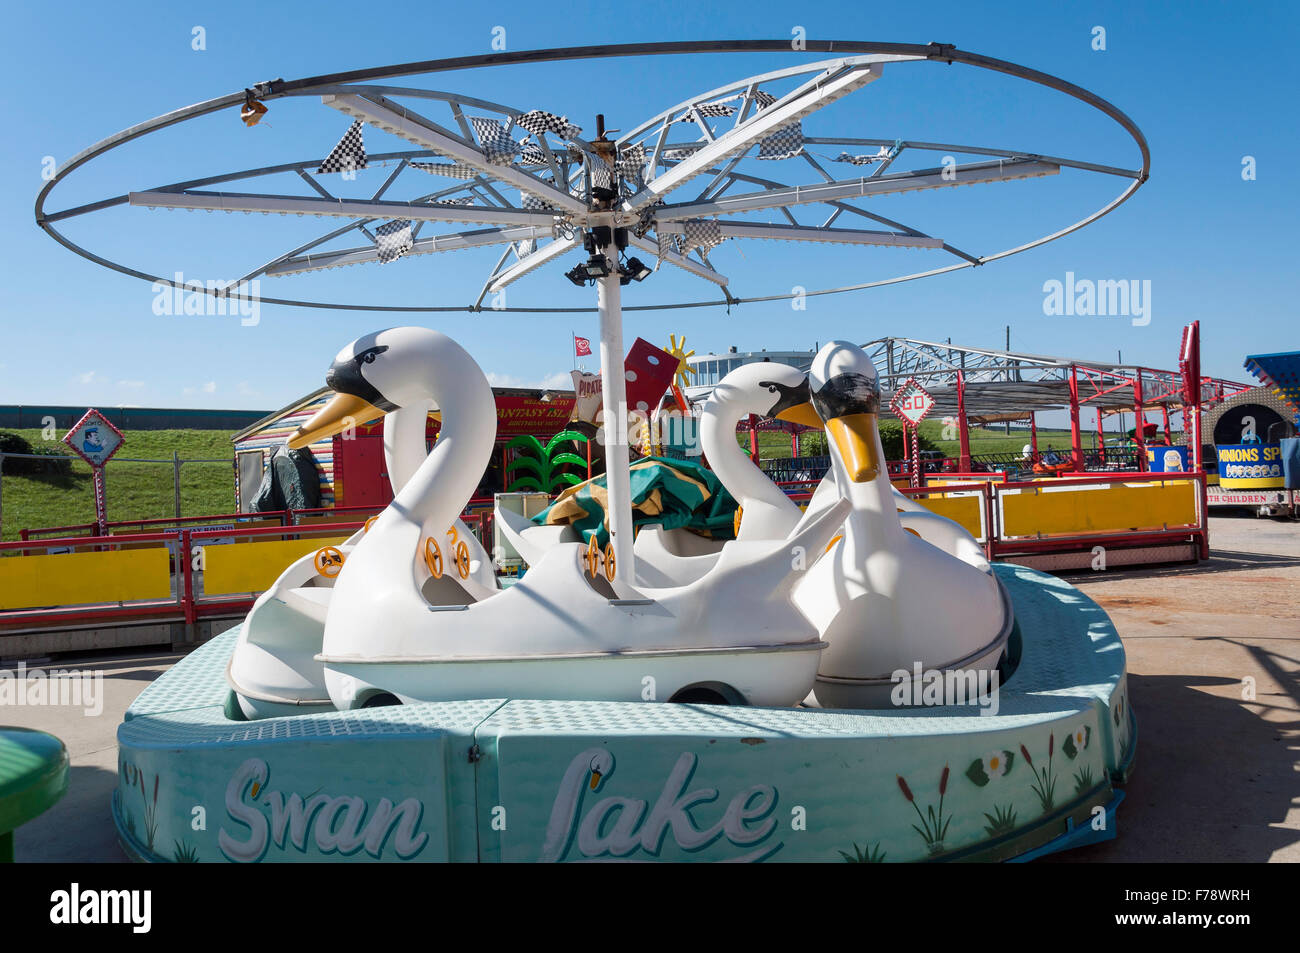 Swan Lake per bambini in giro Fantasy Island Amusement Park, Eastern Esplanade, Canvey Island, Essex, Inghilterra, Regno Unito Foto Stock